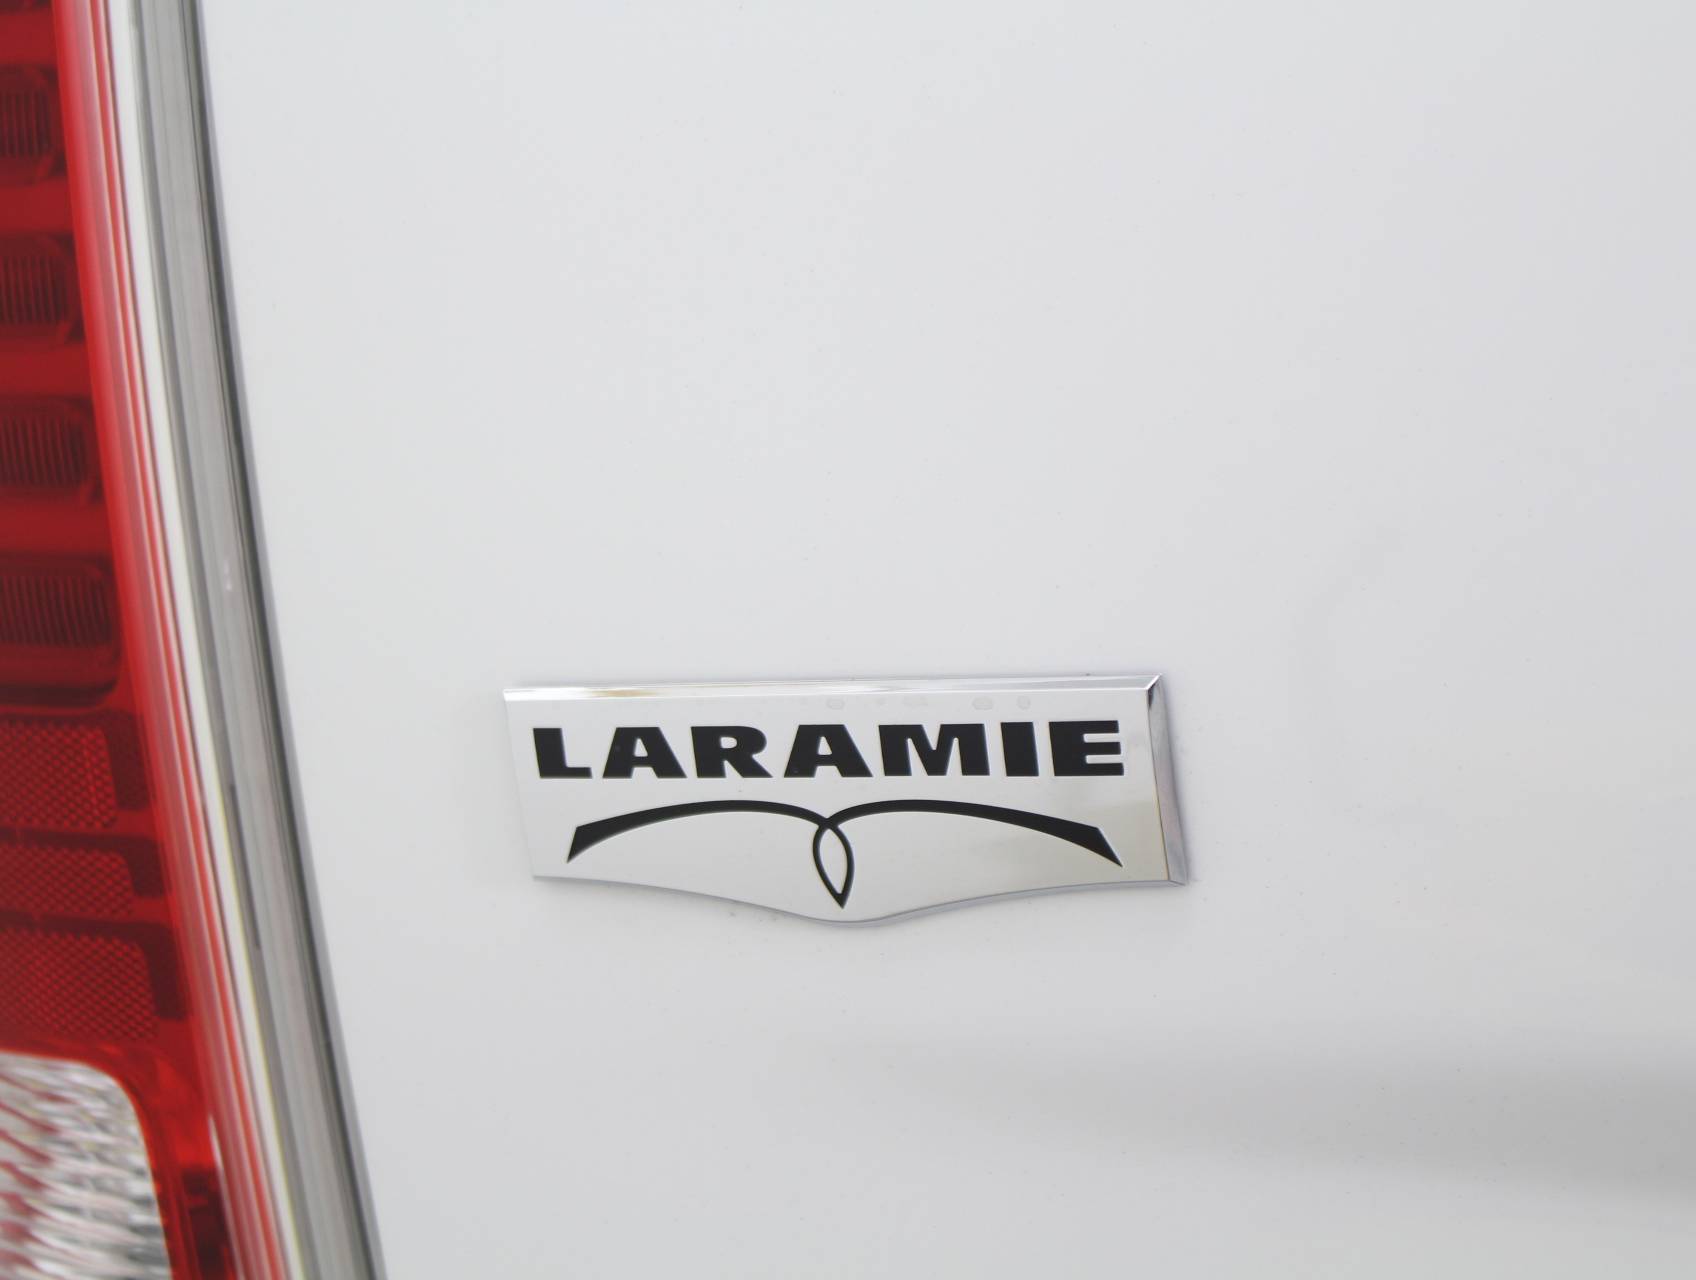 Florida Fine Cars - Used RAM 1500 2017 MIAMI Laramie 4x4